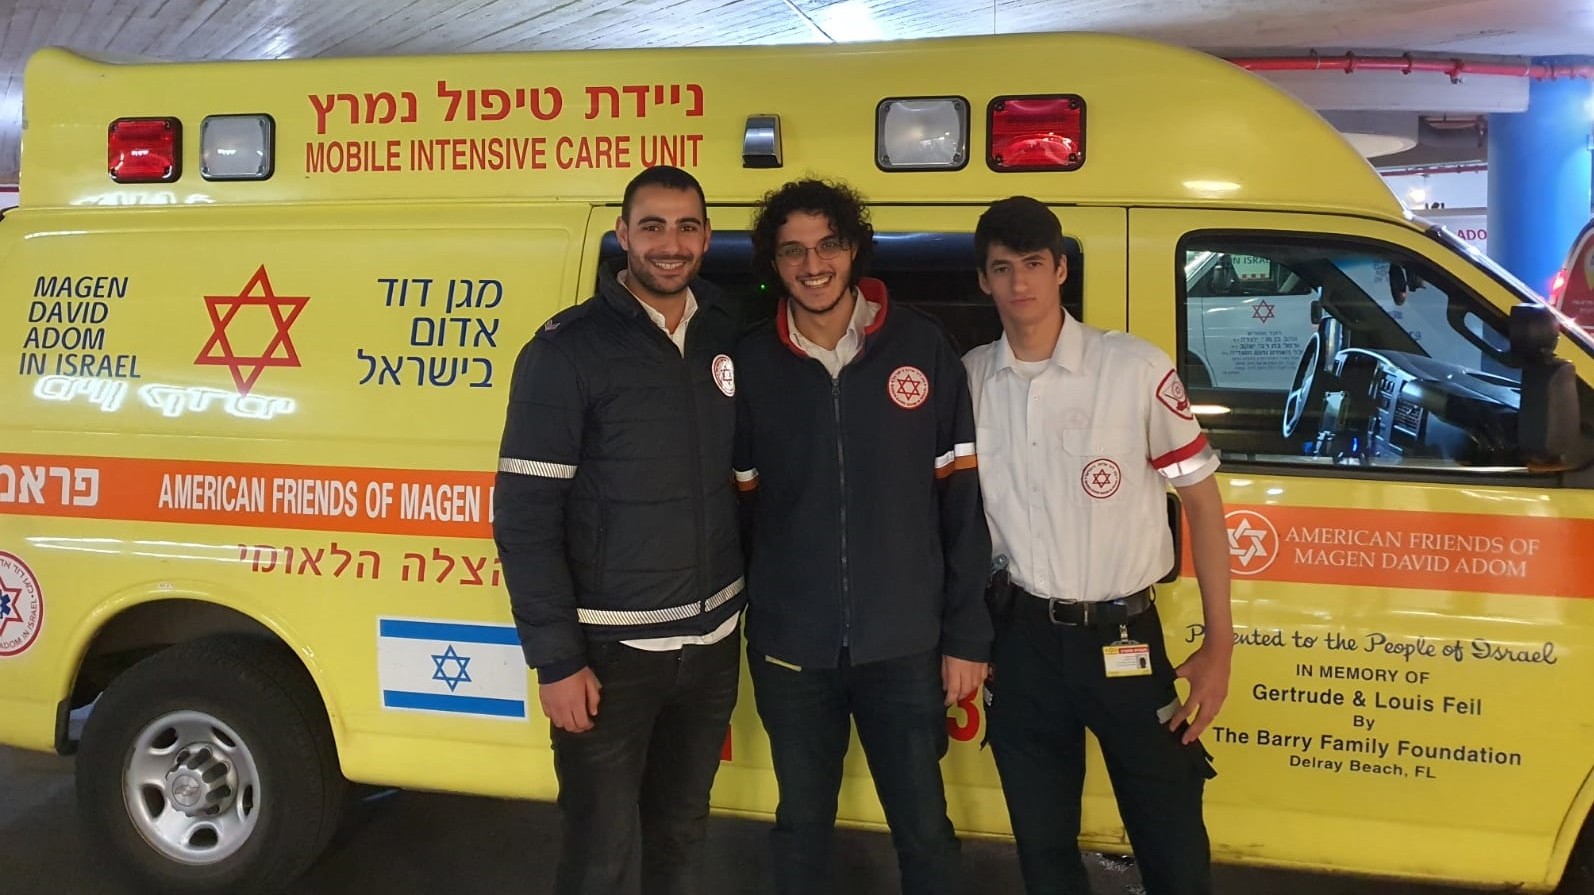 From left, MDA MDA Senior EMT Moshe Sasi, MDA Paramedic Simha Simanduyev and youth volunteer Ido Edelheit. Photo courtesy of MDA